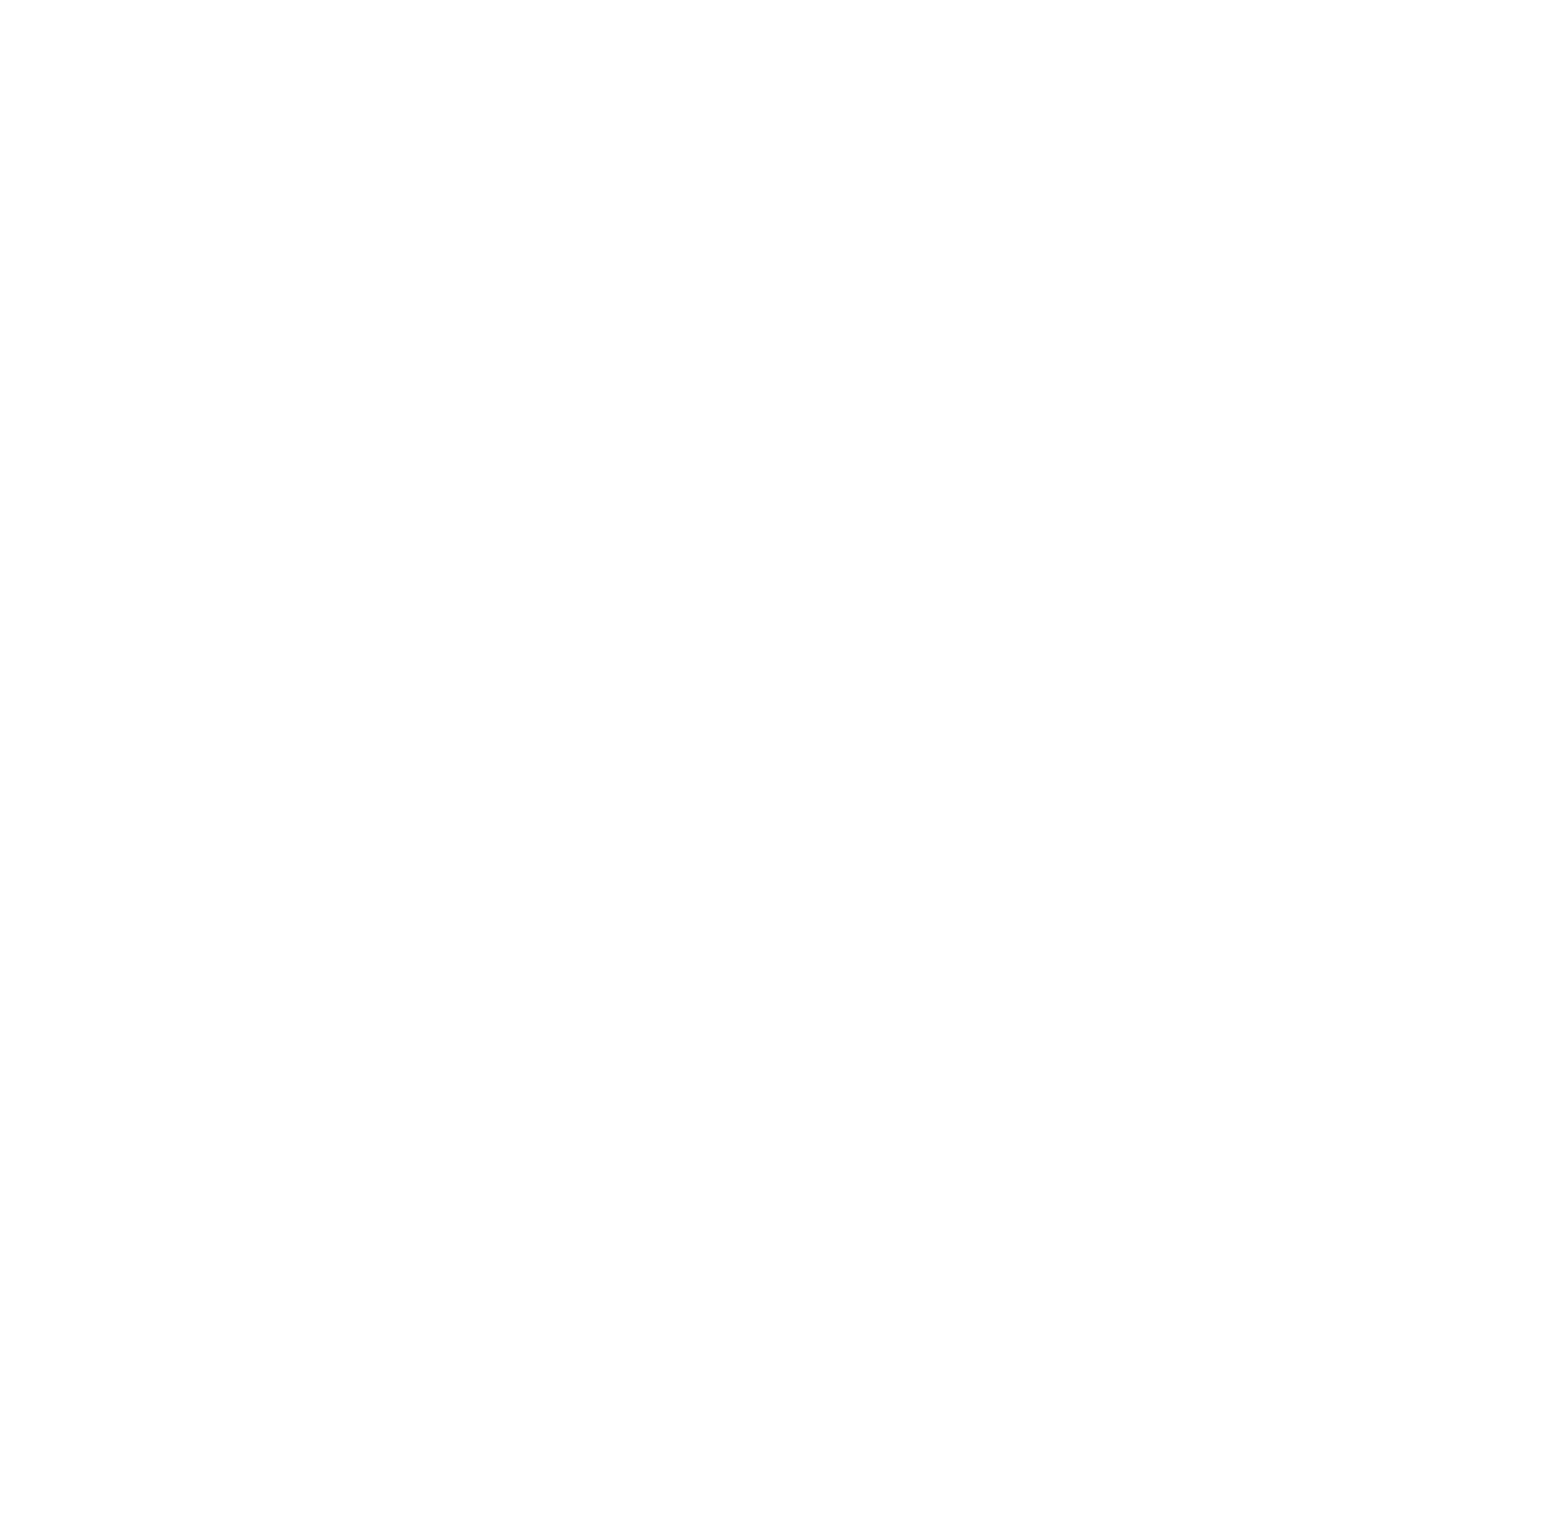 Kuwait Real Estate Company (AQARAT) logo large for dark backgrounds (transparent PNG)